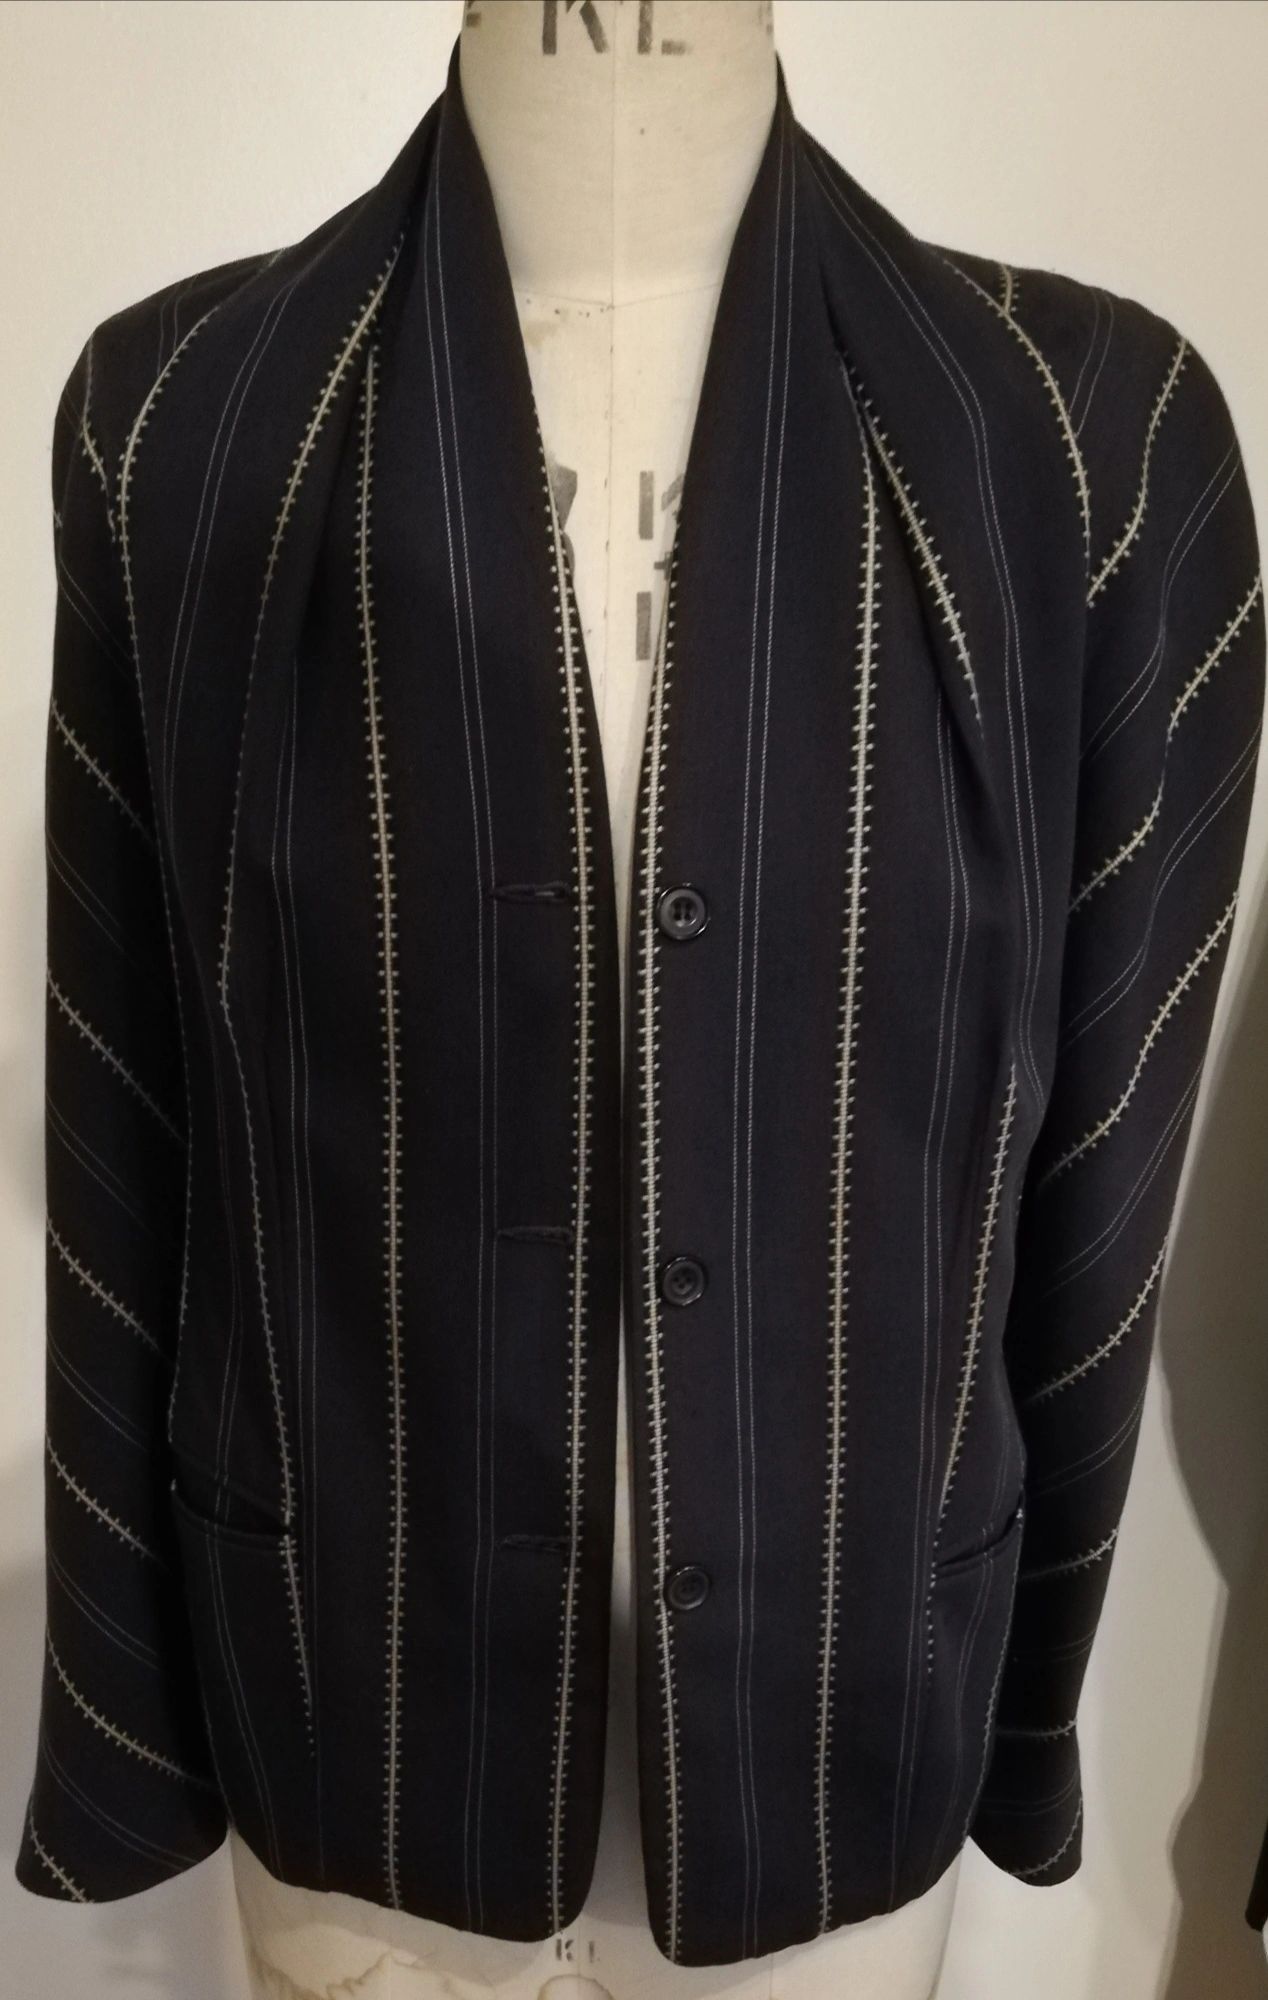 John Galliano jacket from the 80s : r/ThriftStoreHauls